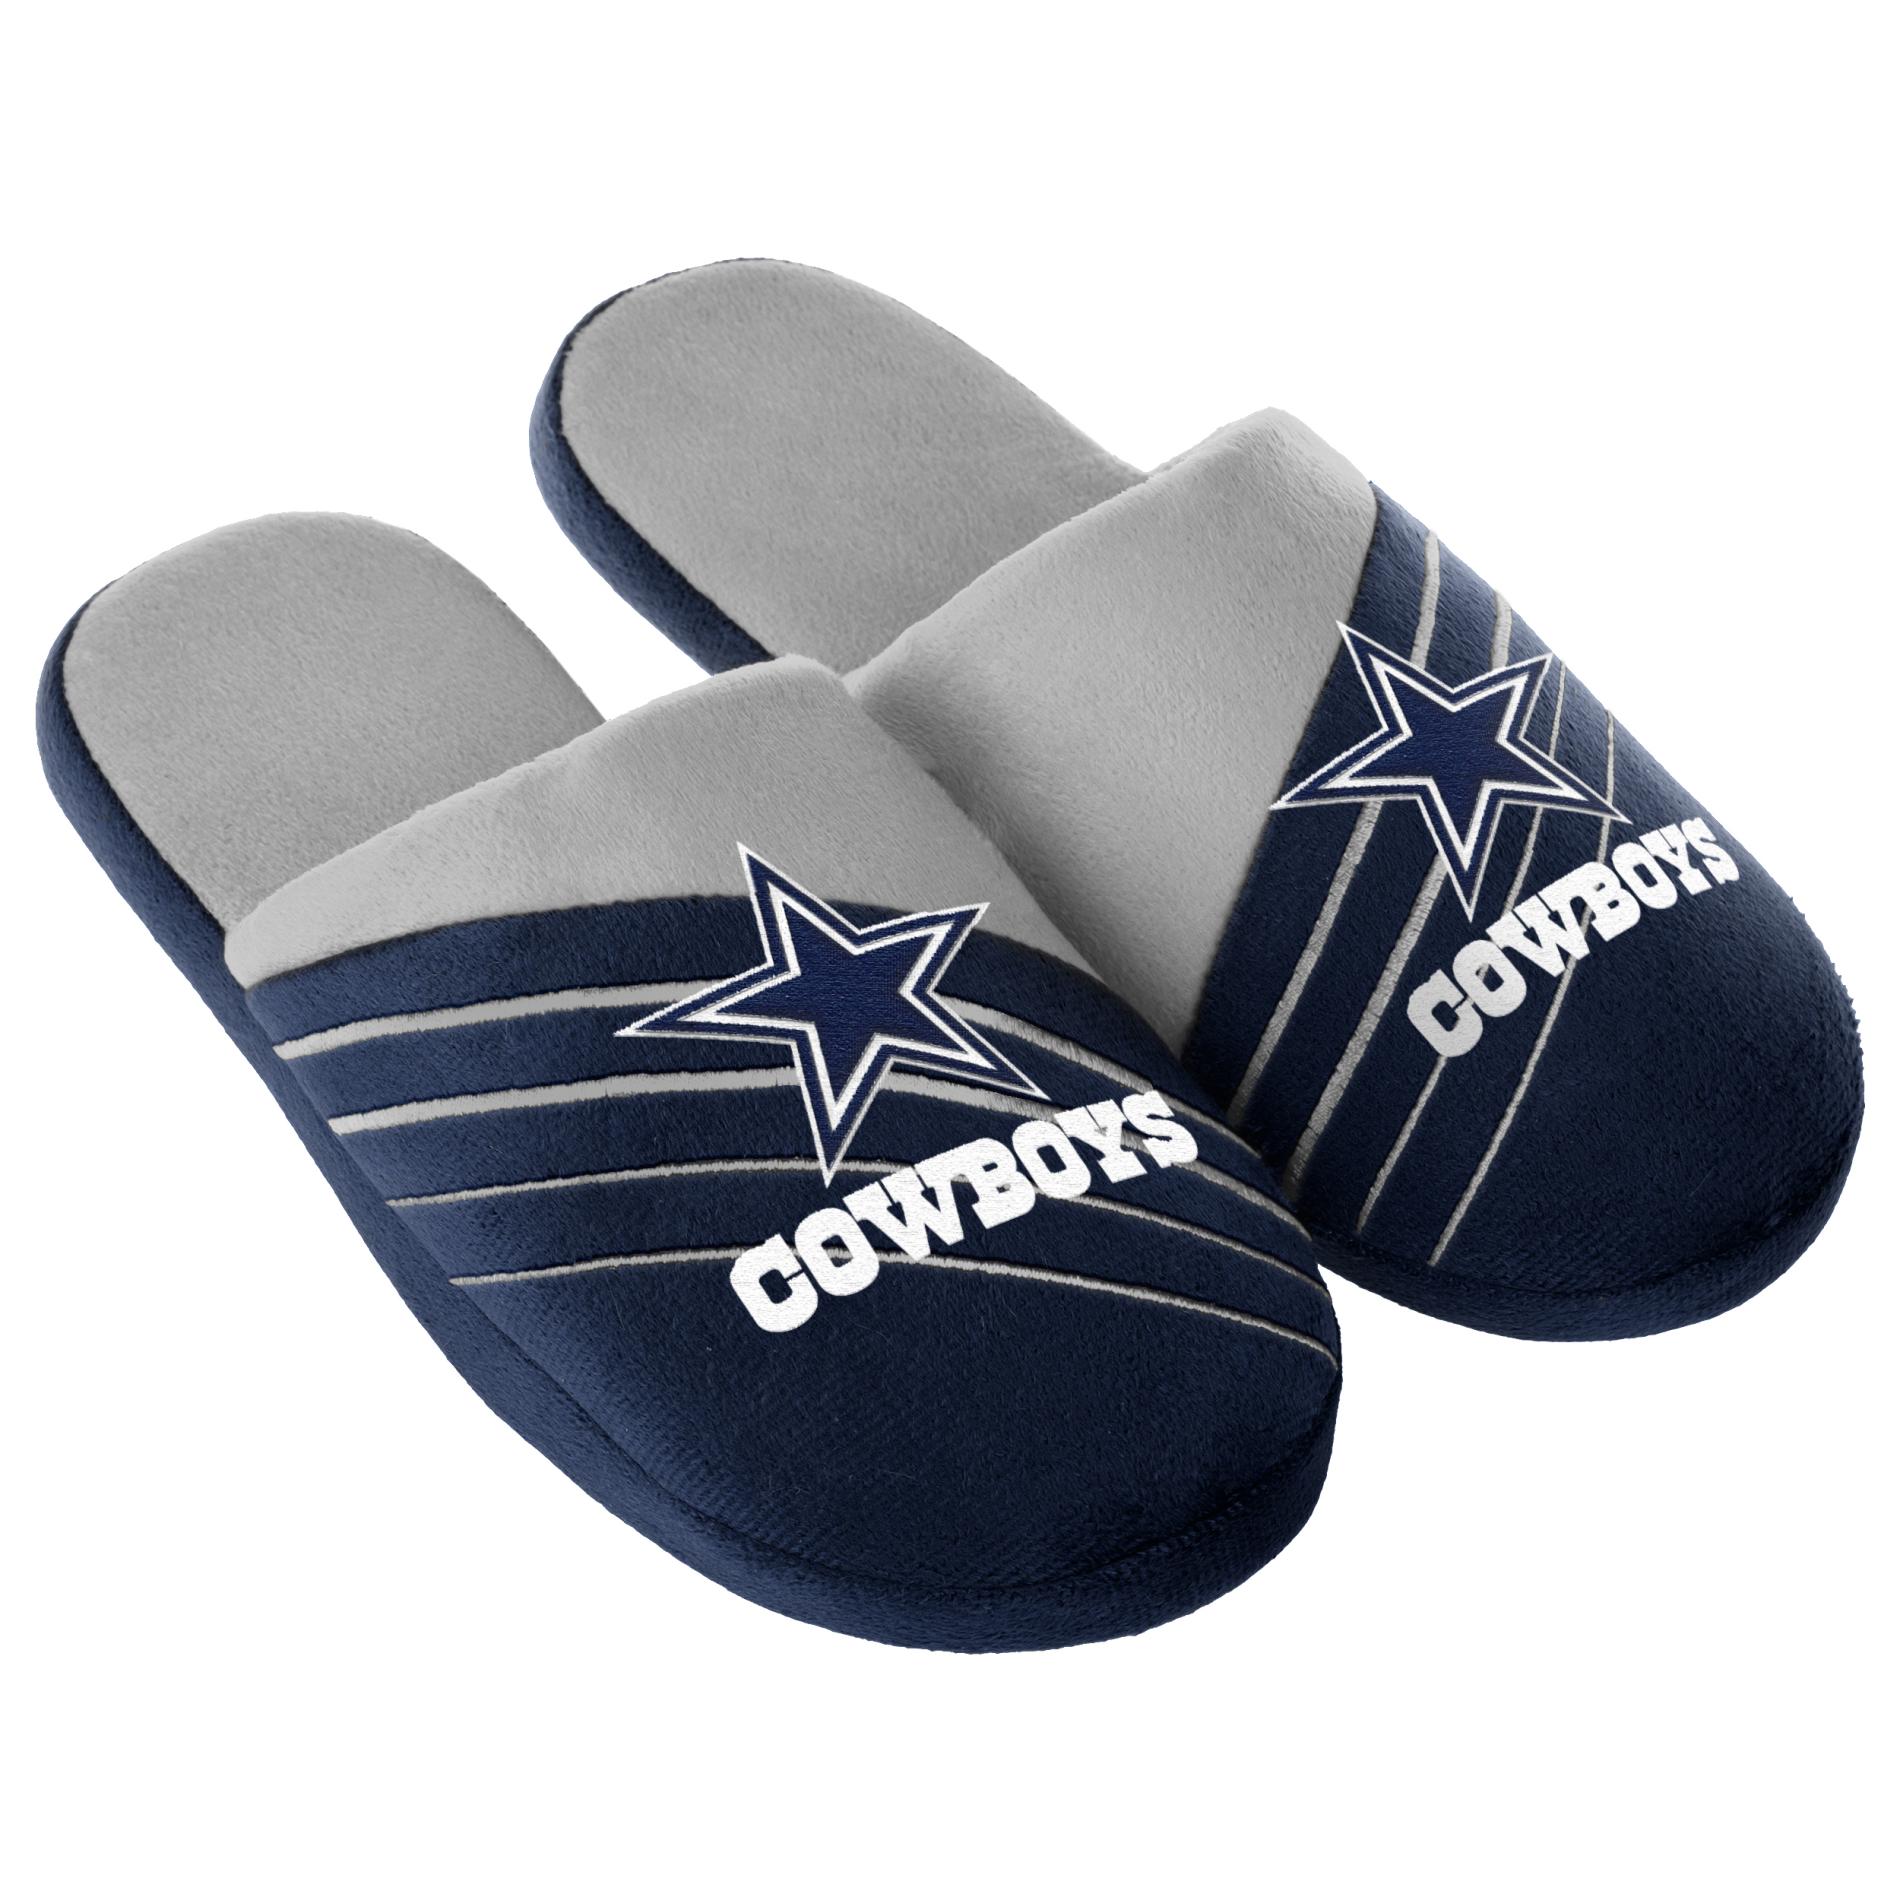 NFL Men's Dallas Cowboys Navy/Gray Slippers